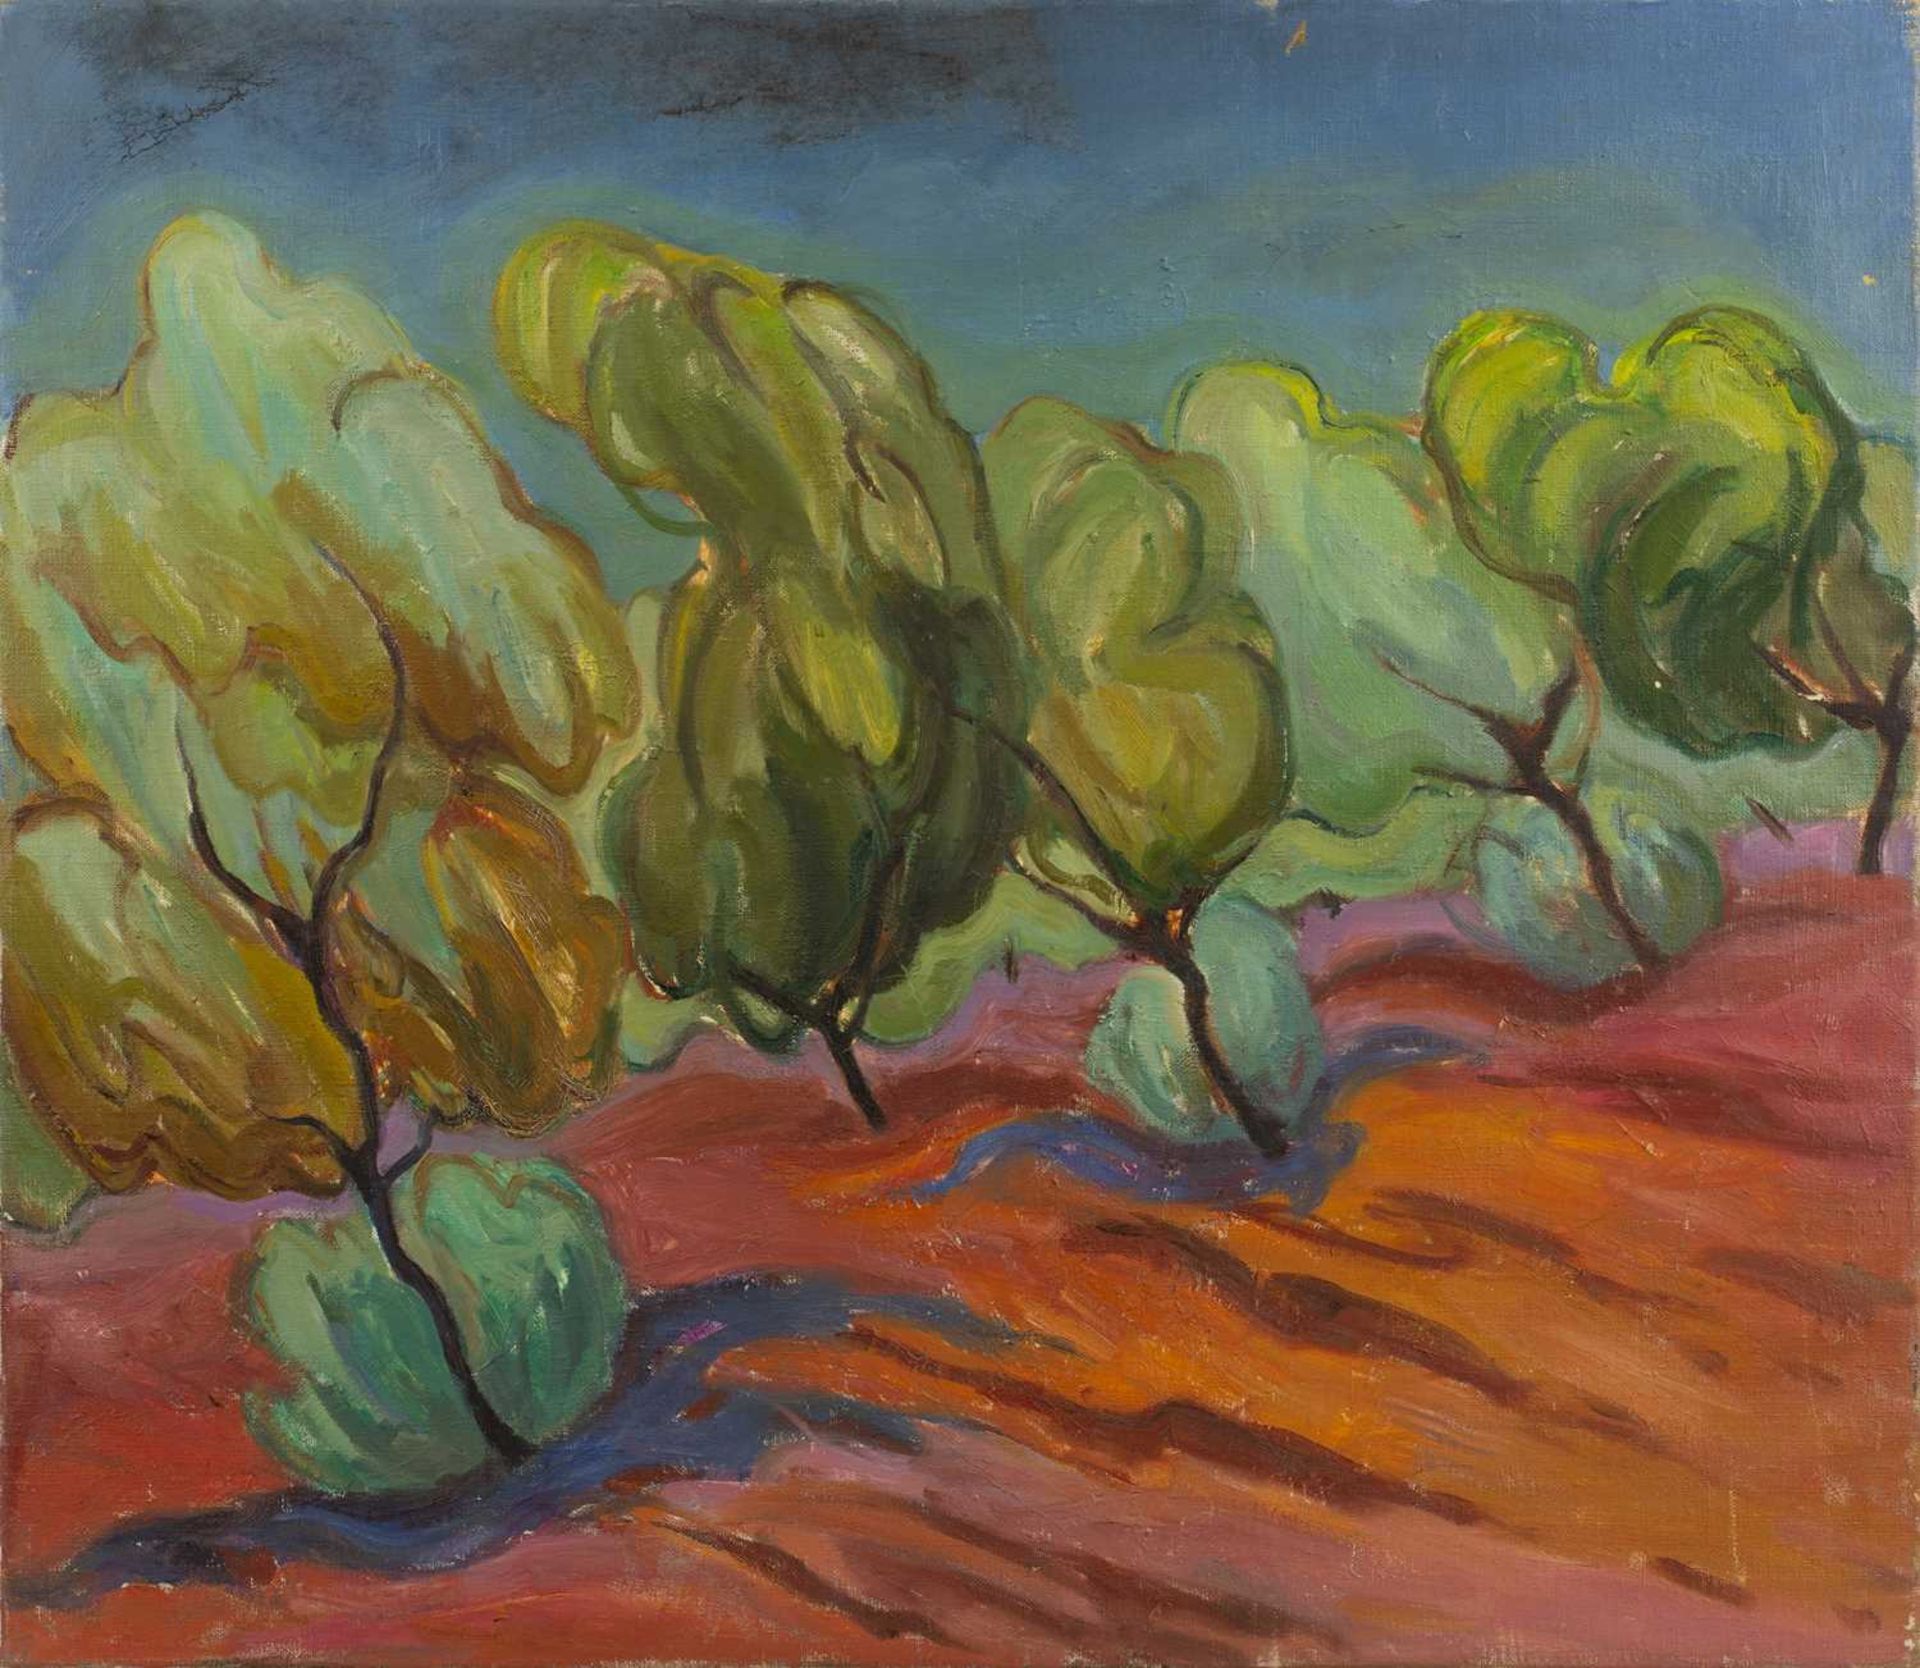 Harry Barr (1896-1987) Tree breezes, oil on canvas,61 x 76cm